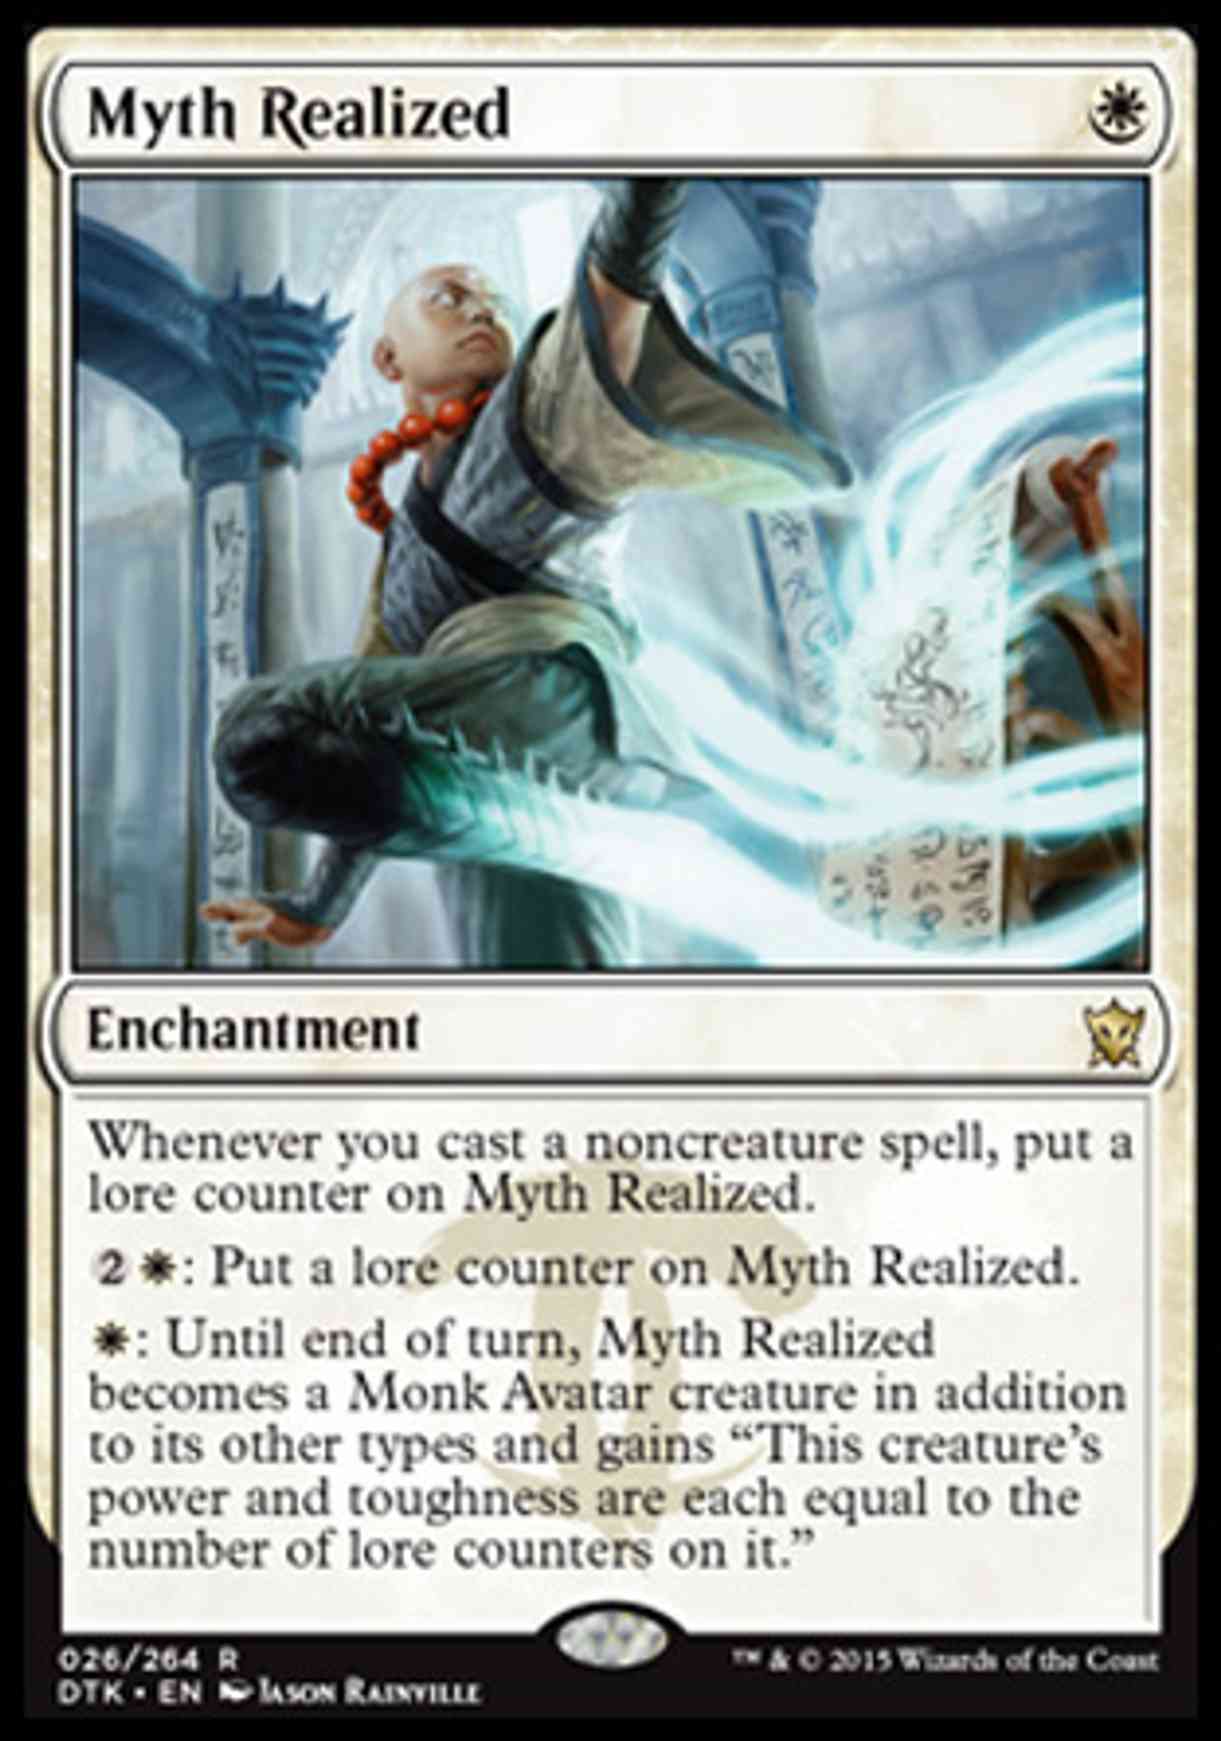 Myth Realized magic card front